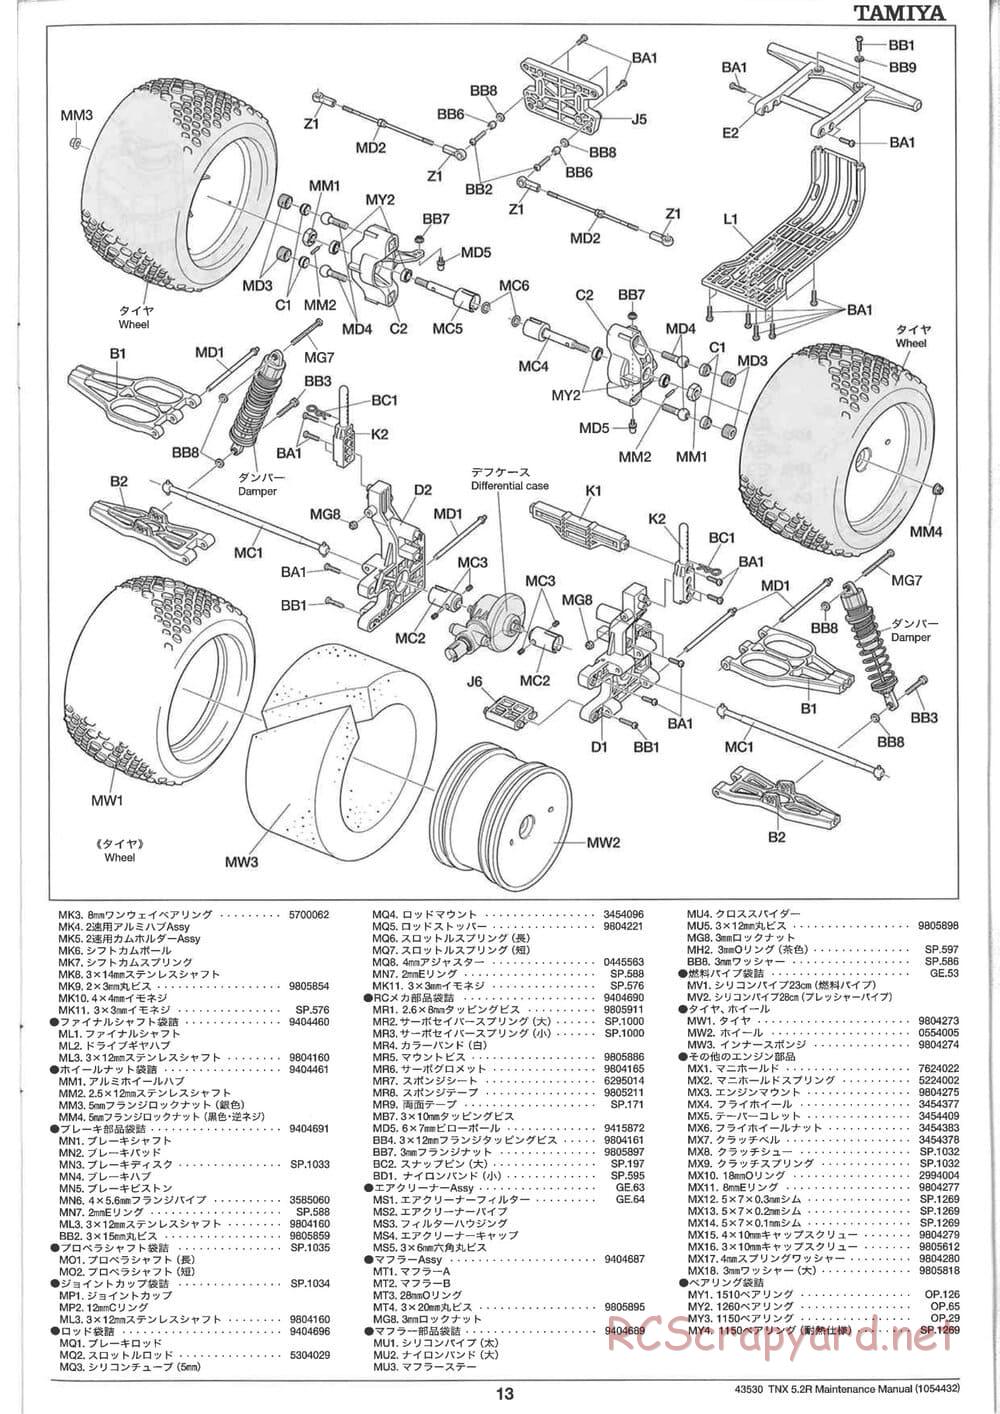 Tamiya - TNX 5.2R - TGM-04 - Maintenance Manual - Page 13